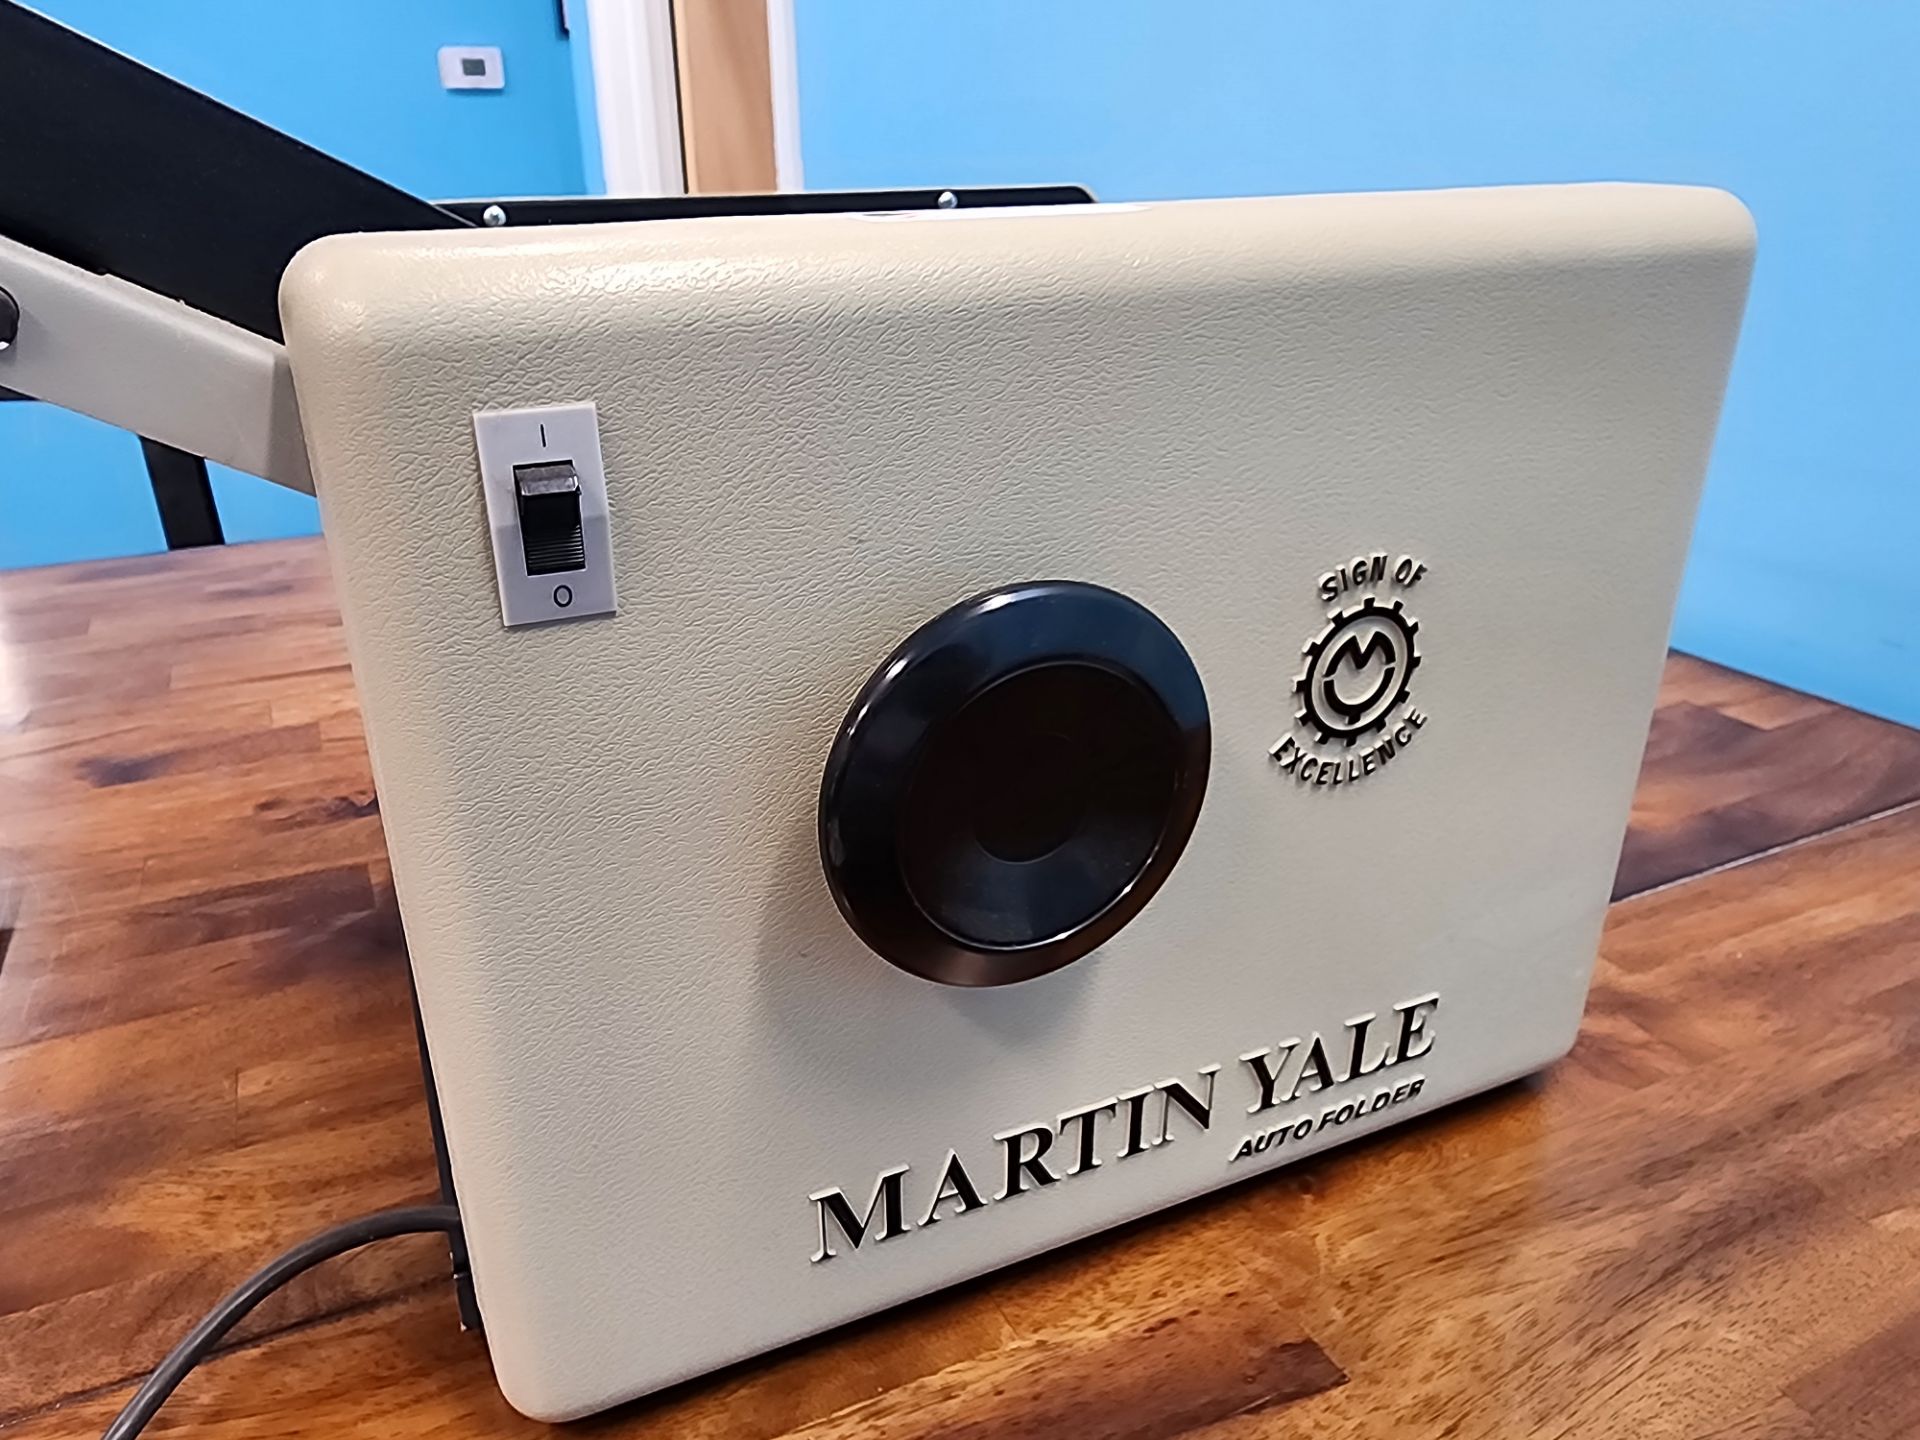 Martin Yale Model CV-7 Auto Folder, S/N 146448 - Image 7 of 7